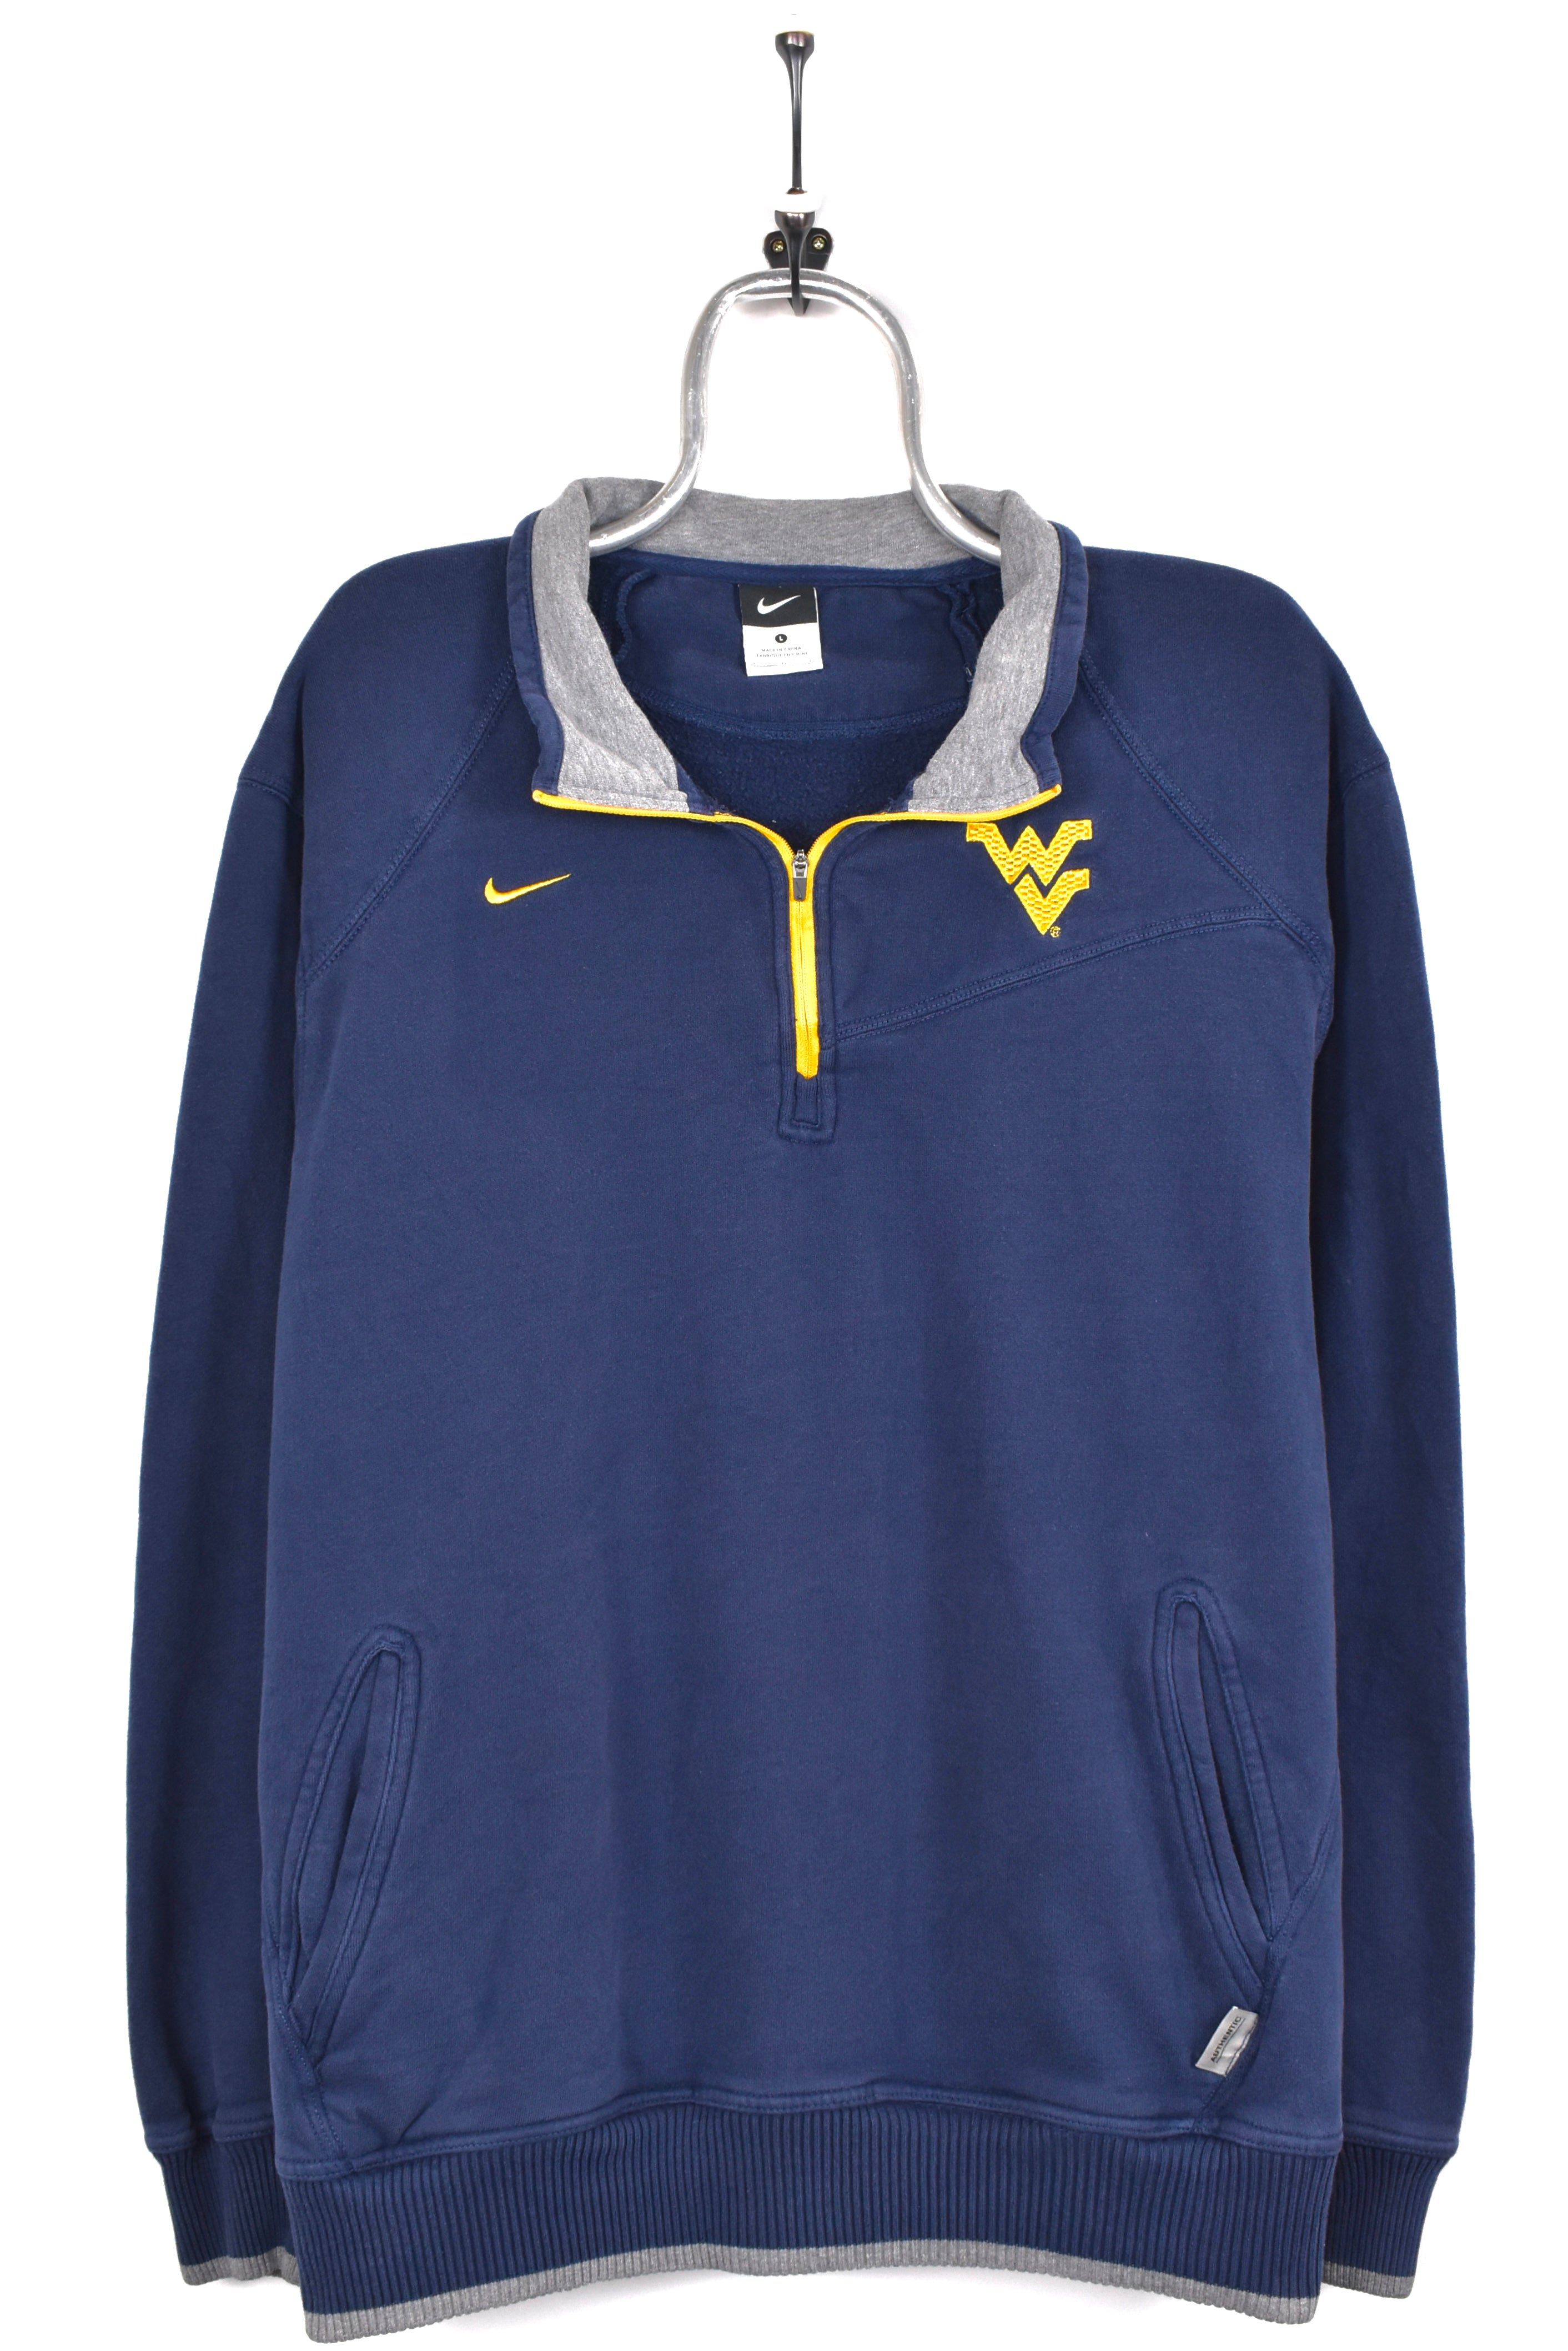 Vintage West Virginia University sweatshirt, blue 1/4 zip embroidered jumper - AU L COLLEGE